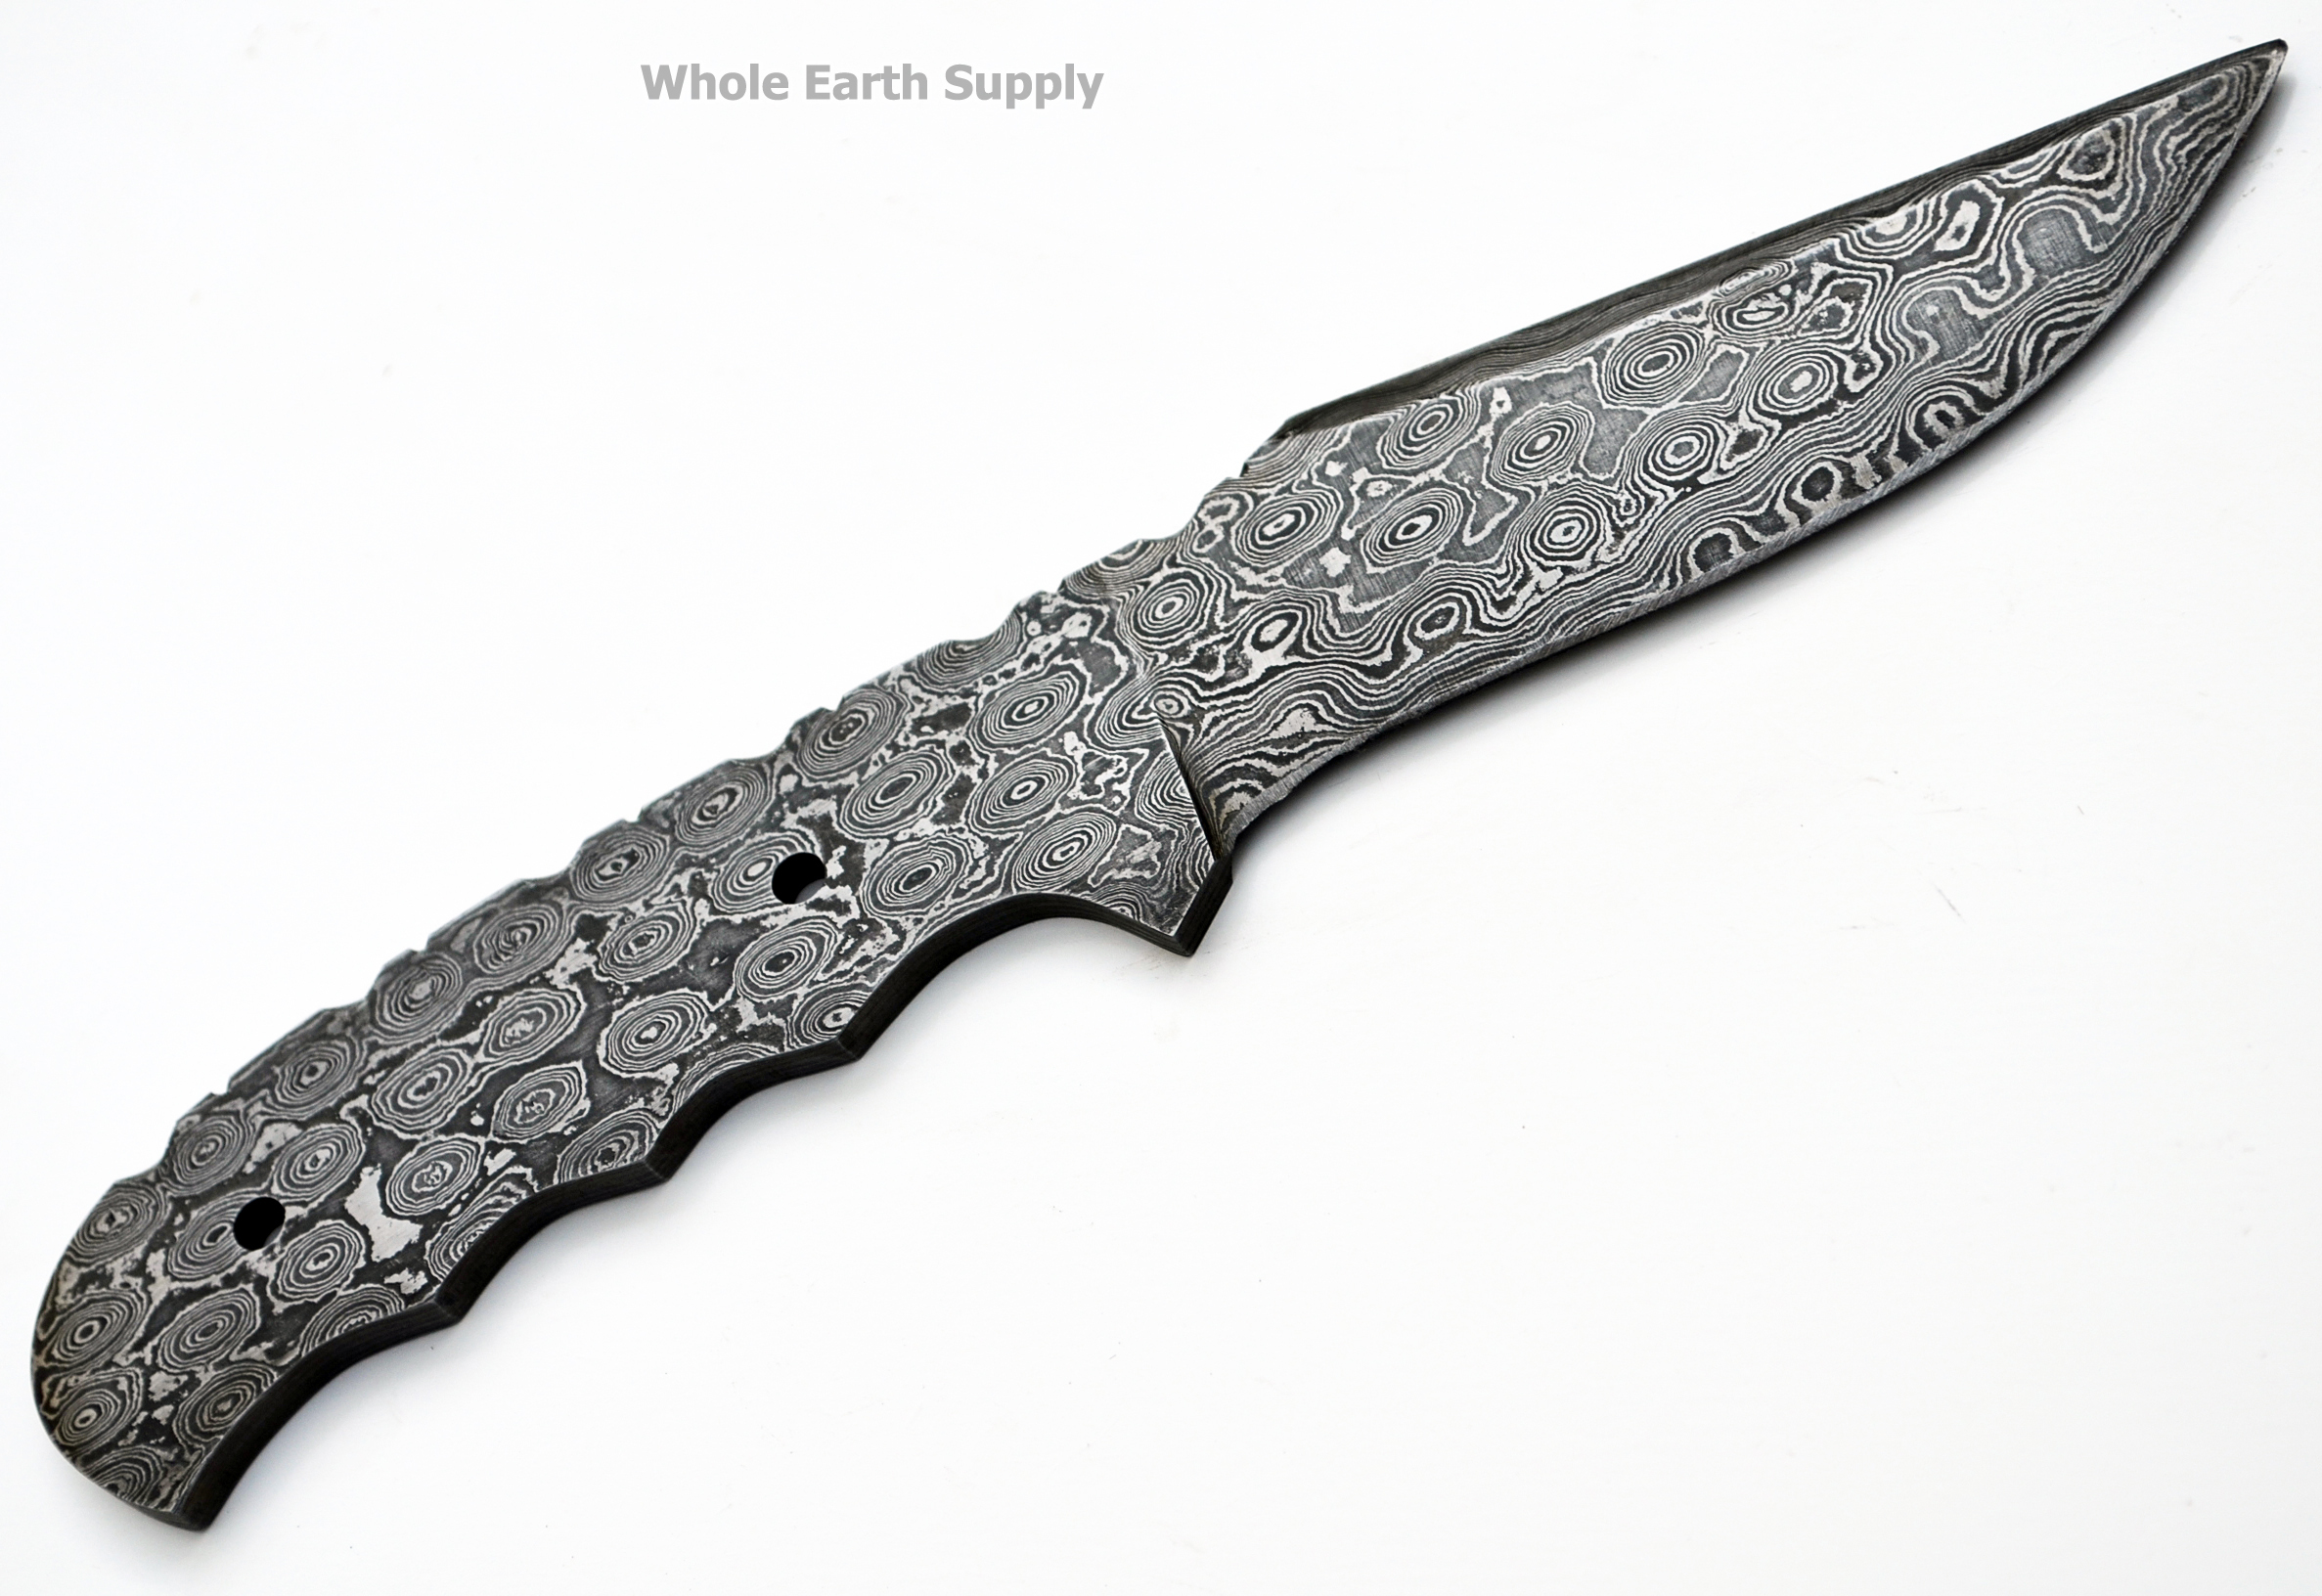 Knife Making Damascus Hunting Skinning Blank Knives Steel 1095 High Custom Blade